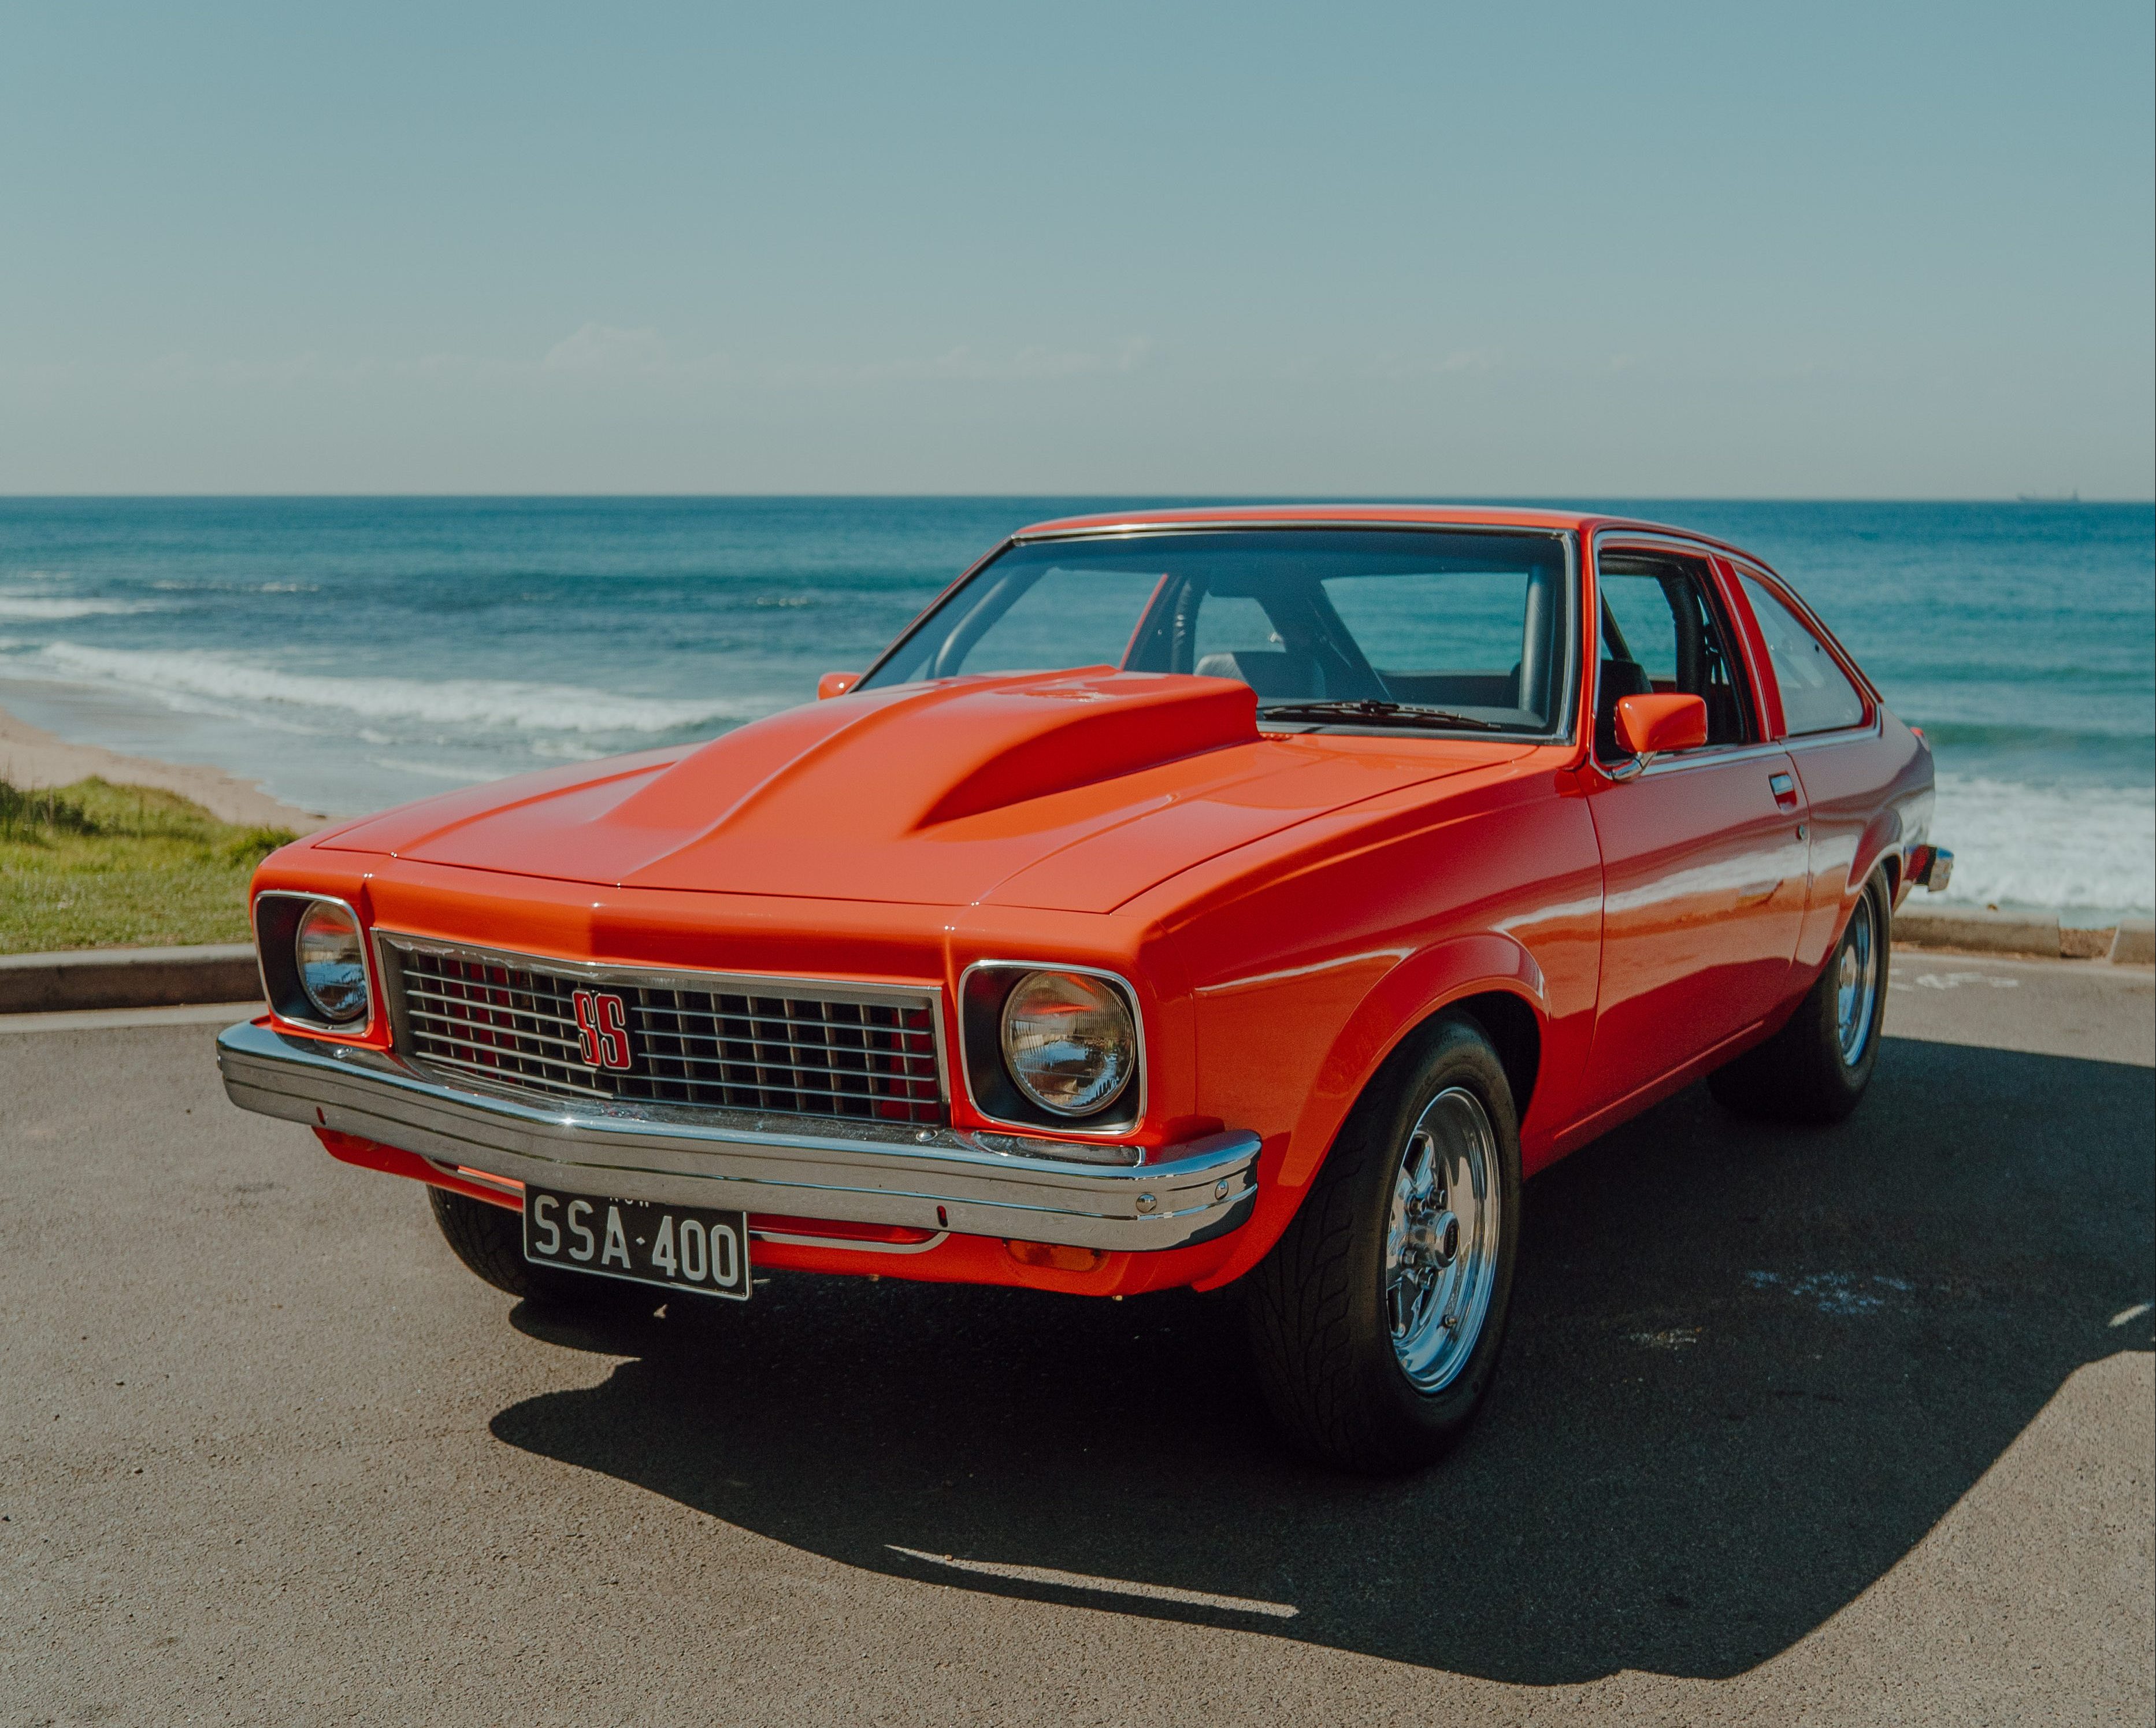 Orange 1976 Holden Torana with reverse cowl scoop at the beach